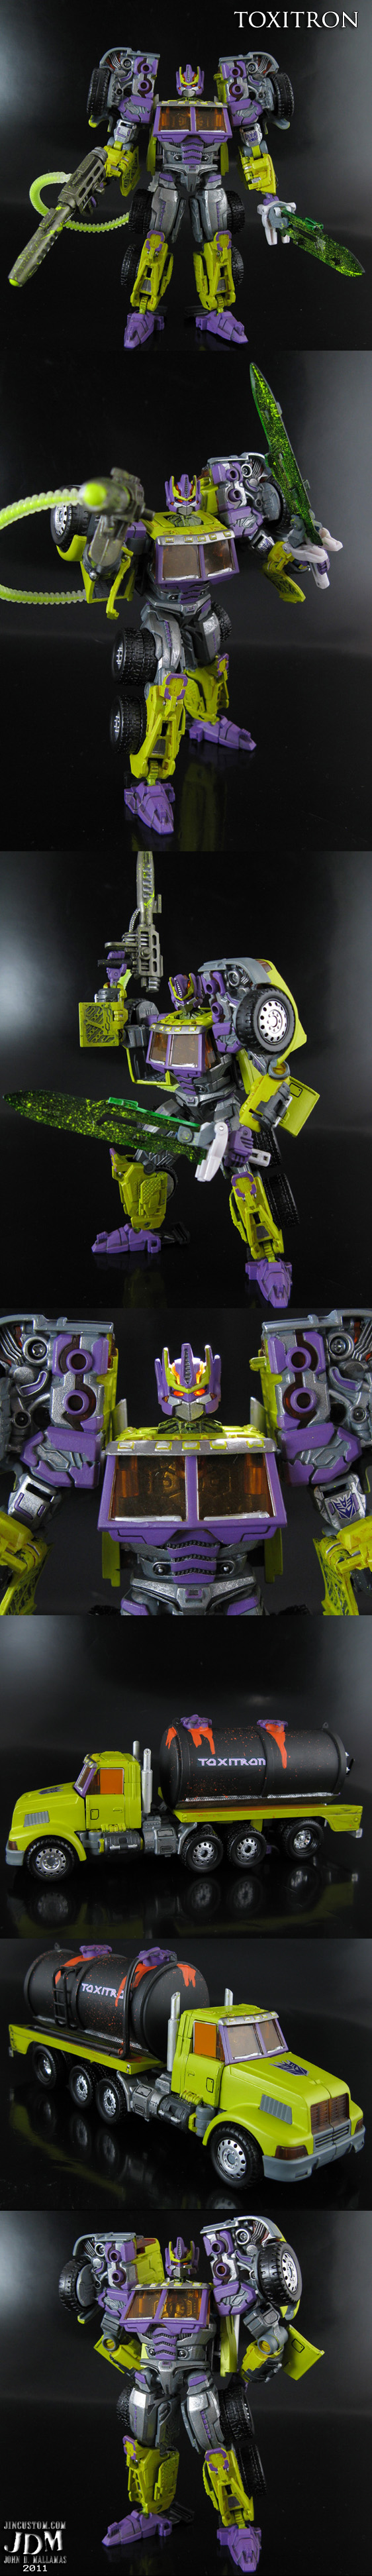 Toxitron Transformers